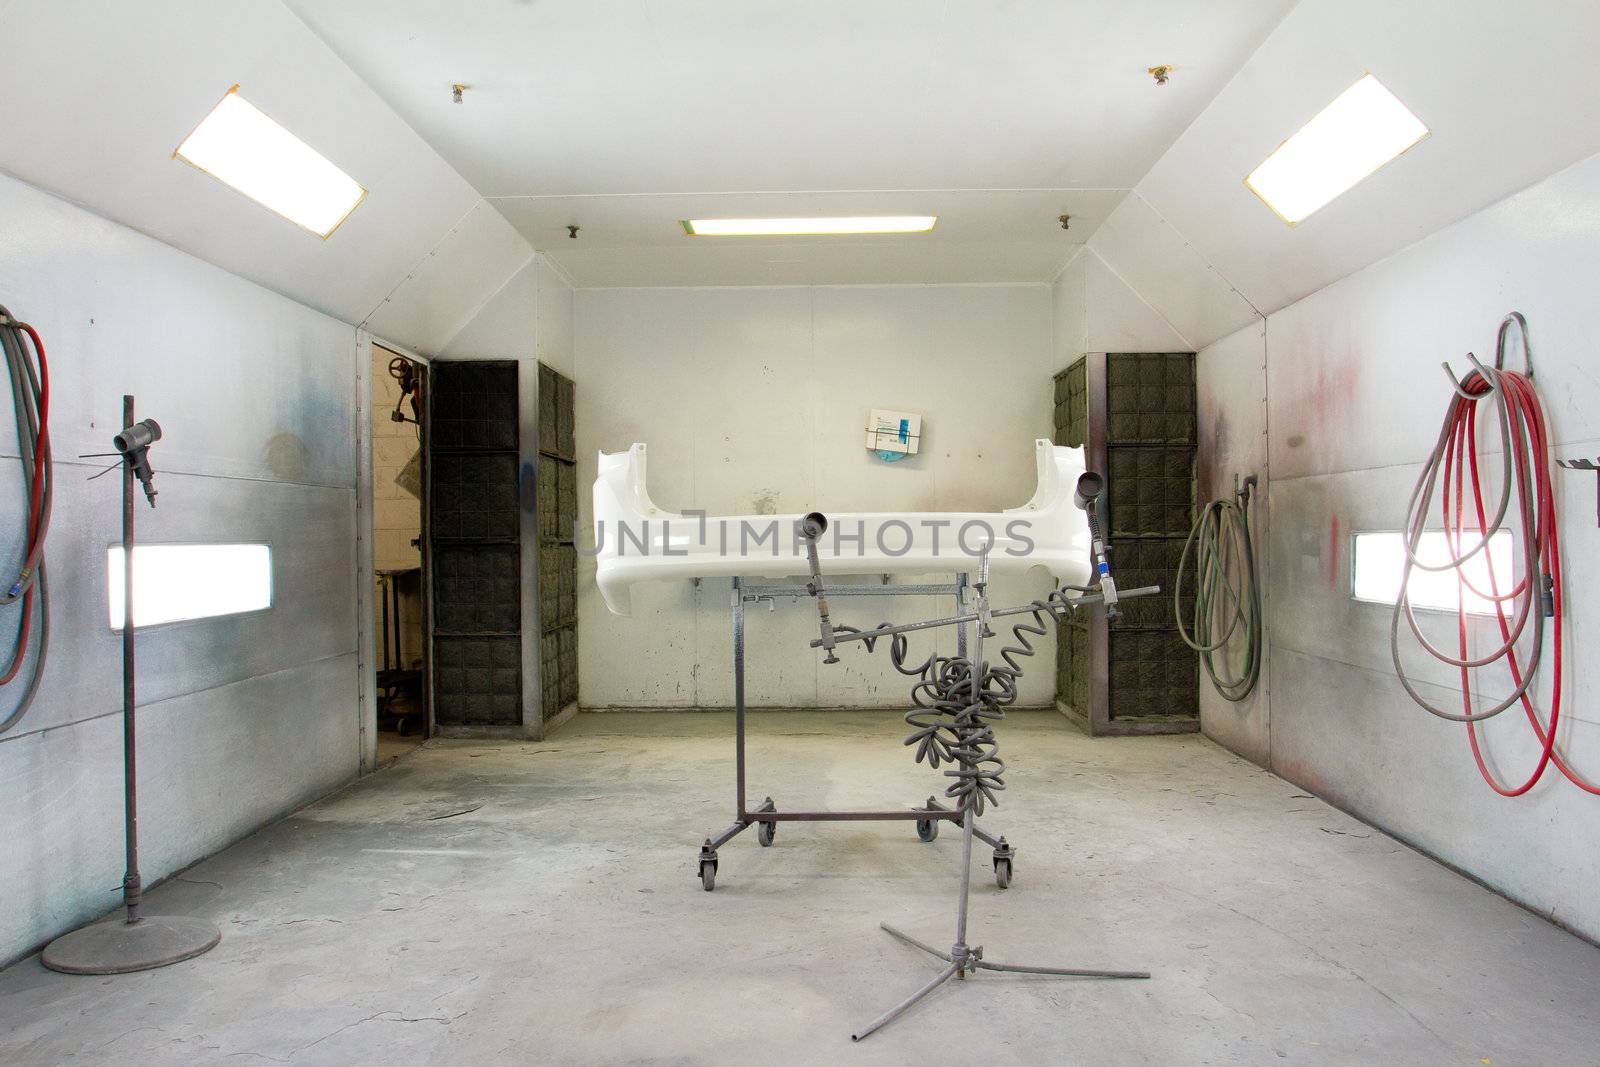 Paint Room Auto Repair Shop by joshuaraineyphotography